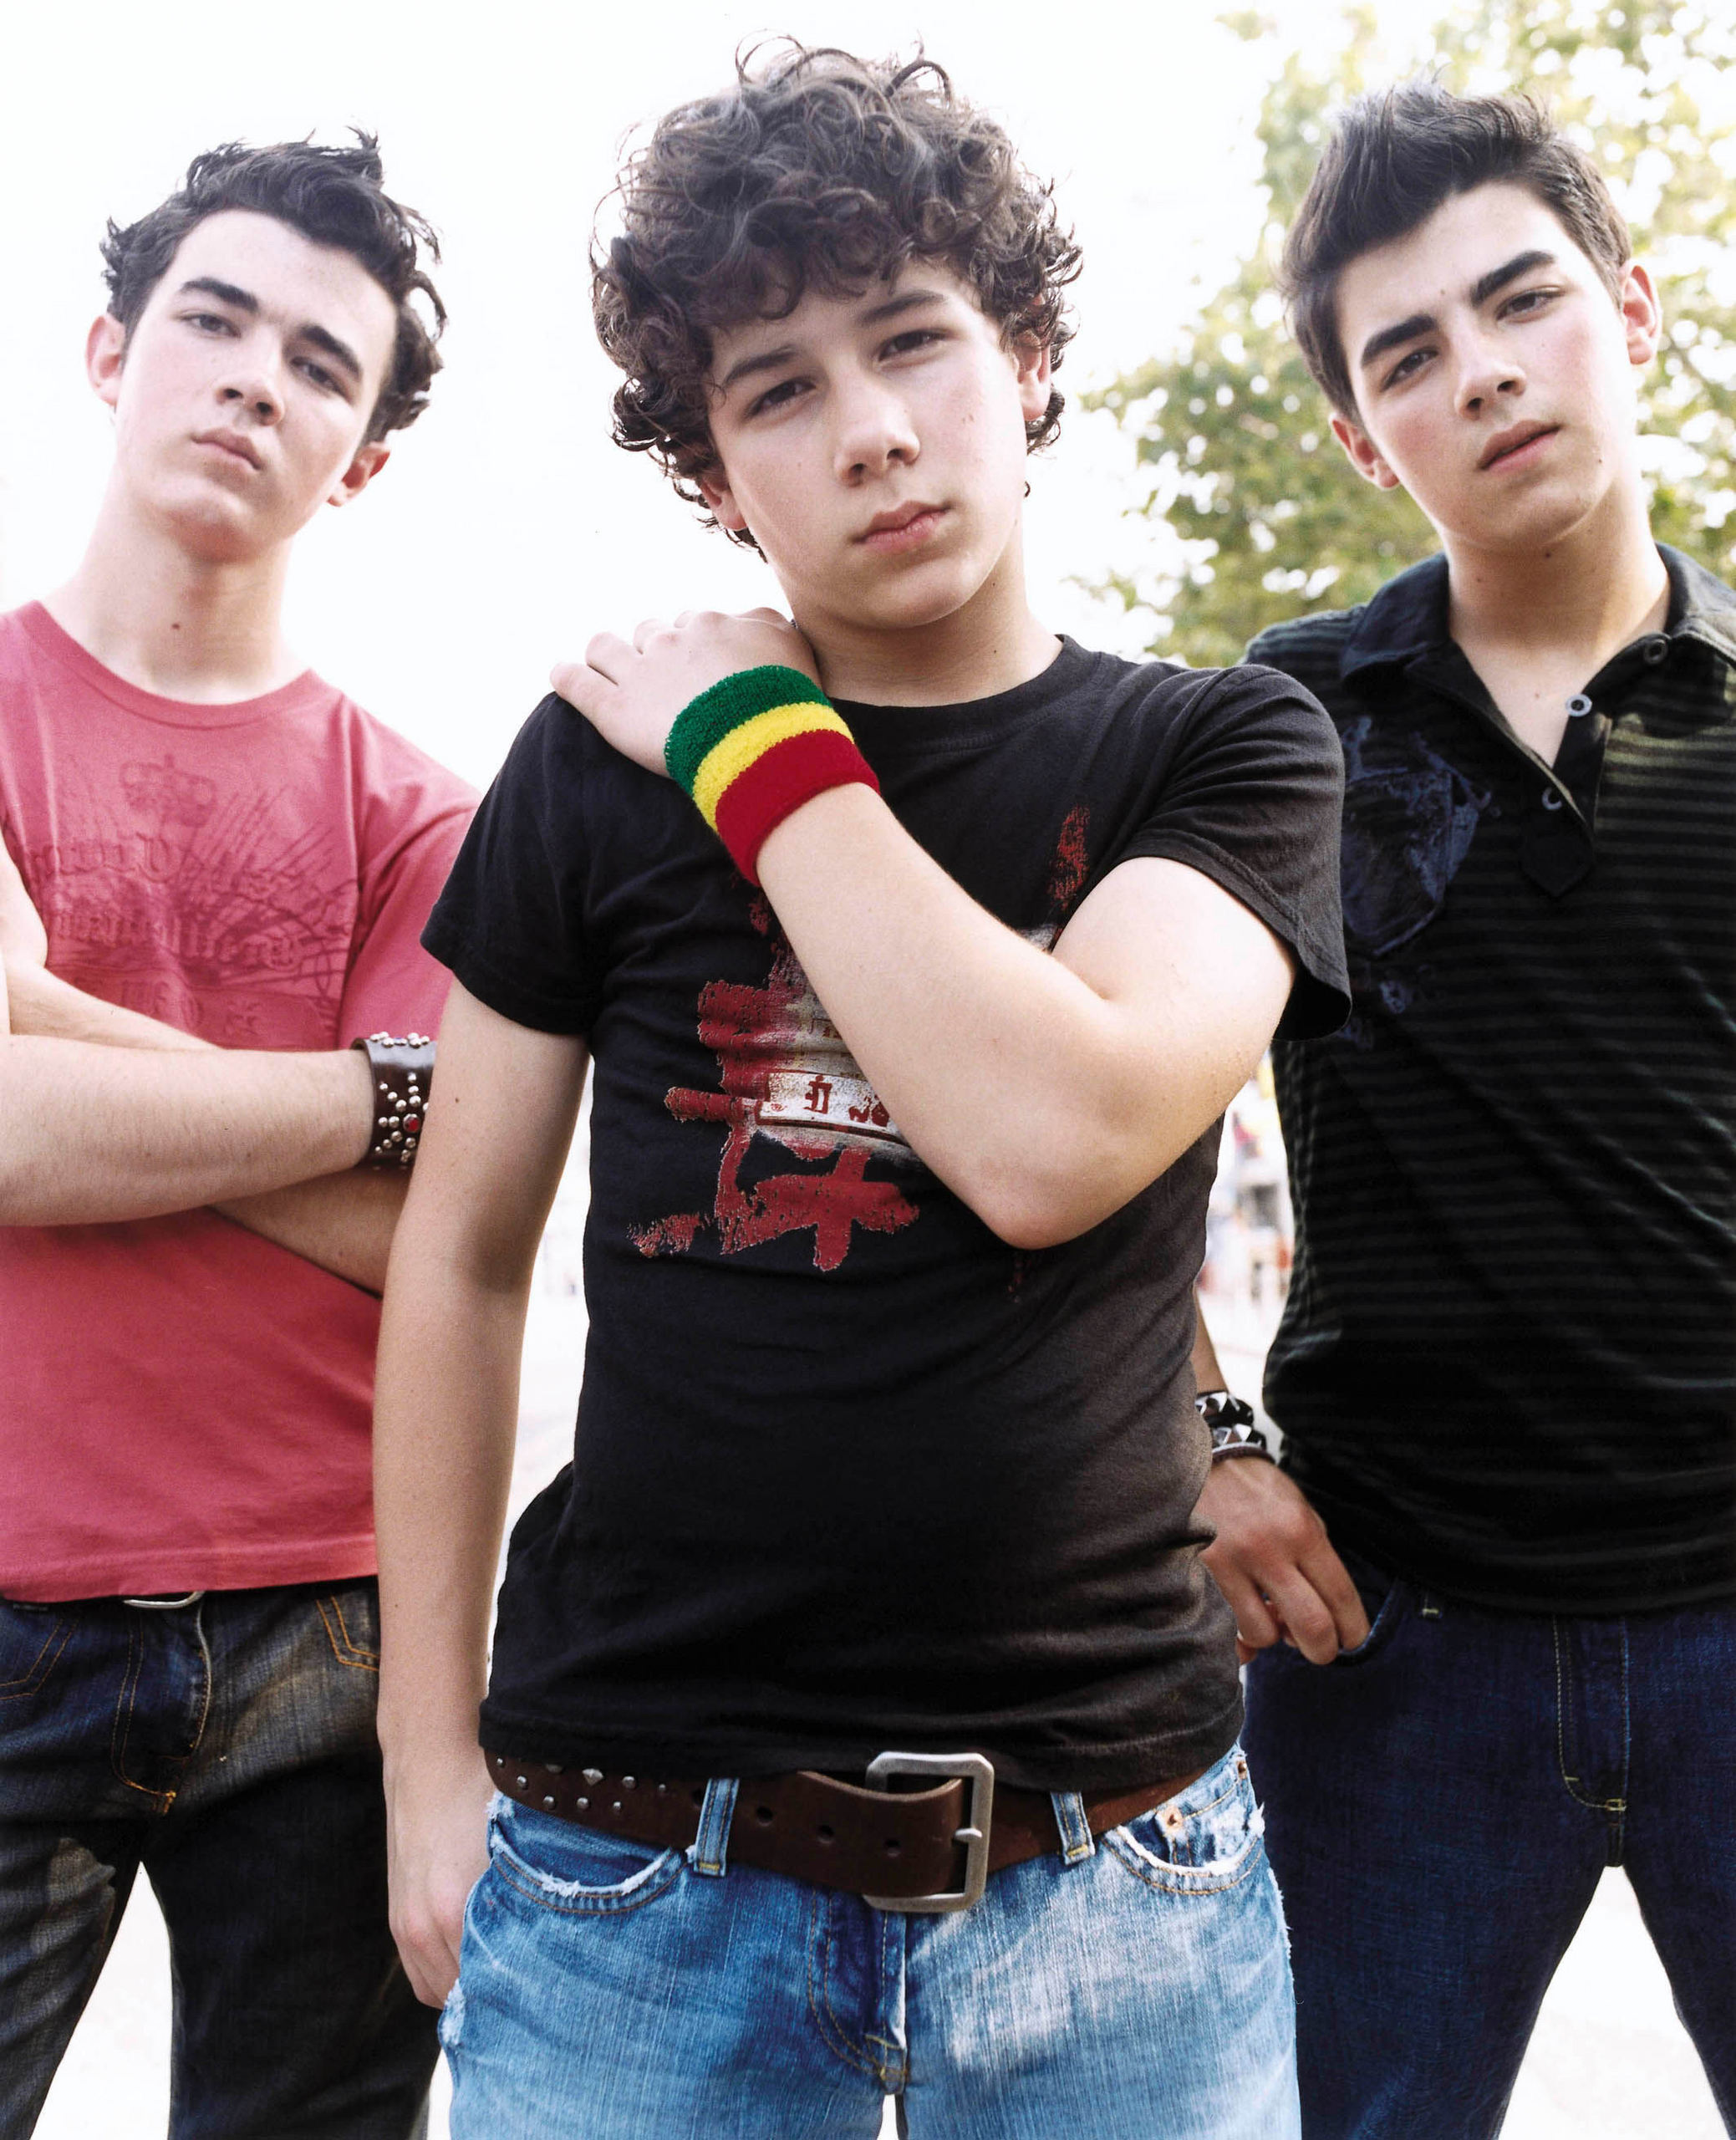 Jonas Brothers - The Jonas Brothers Photo (3468523) - Fanpop